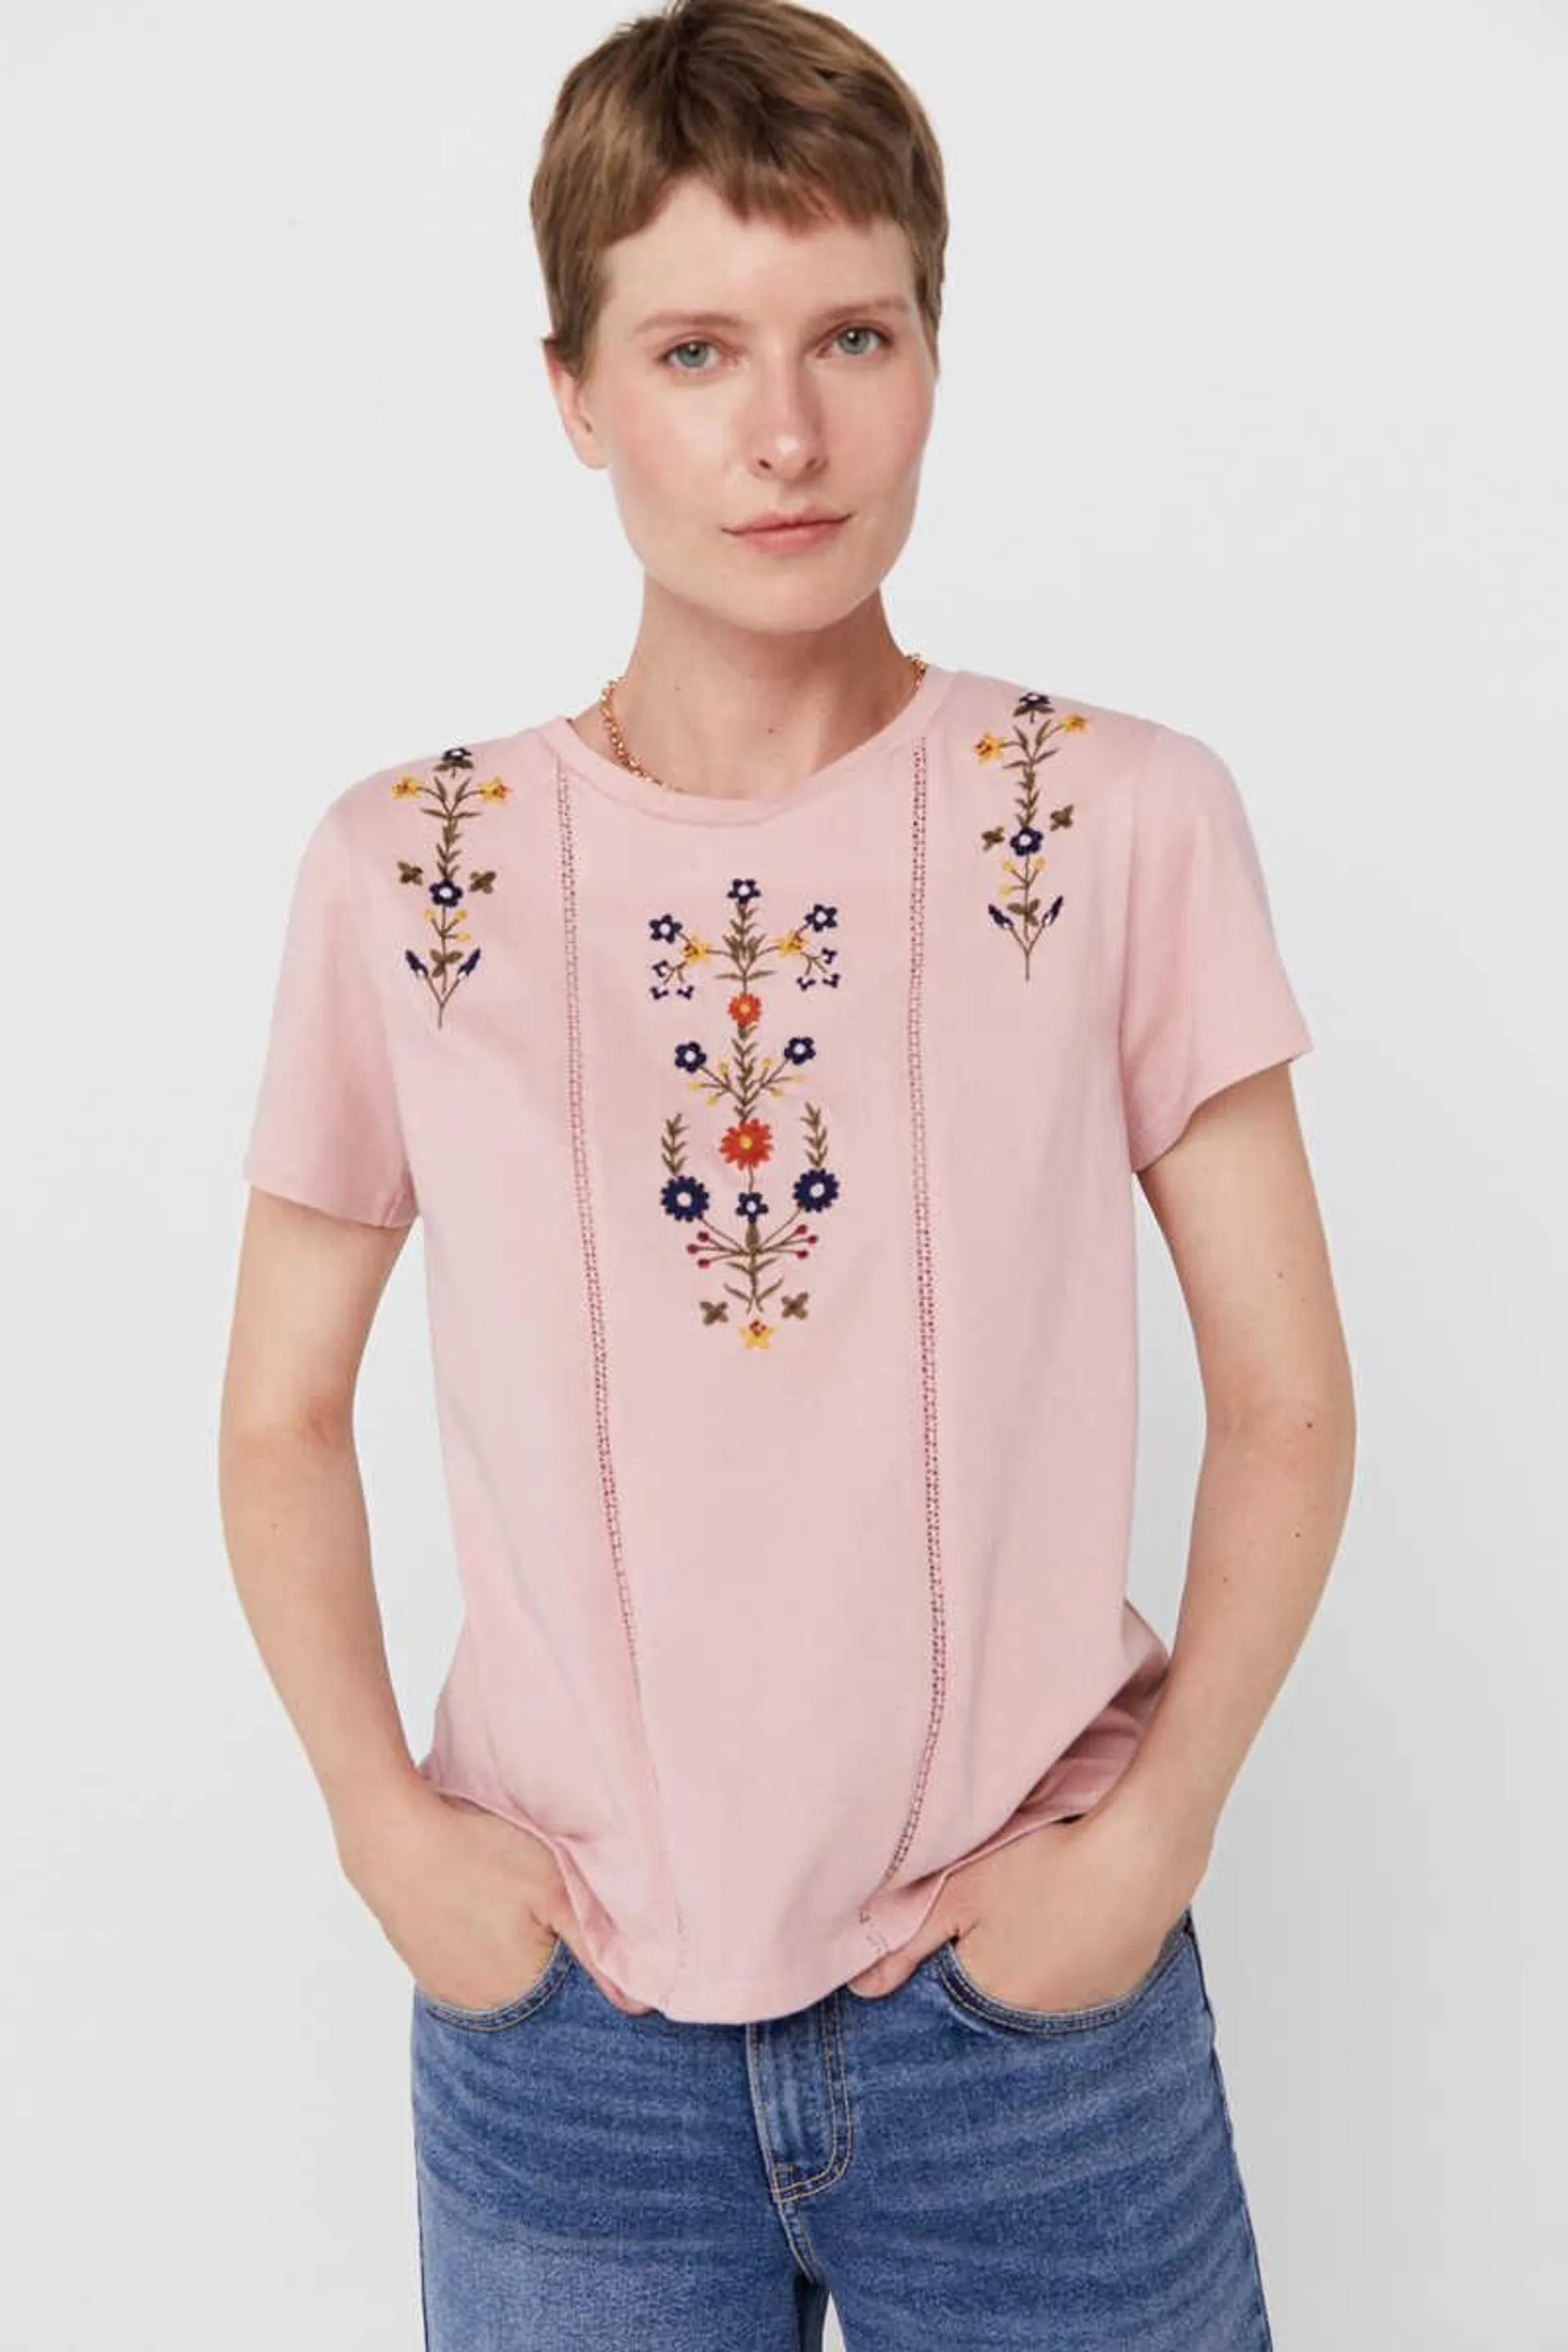 Camiseta bordados florales